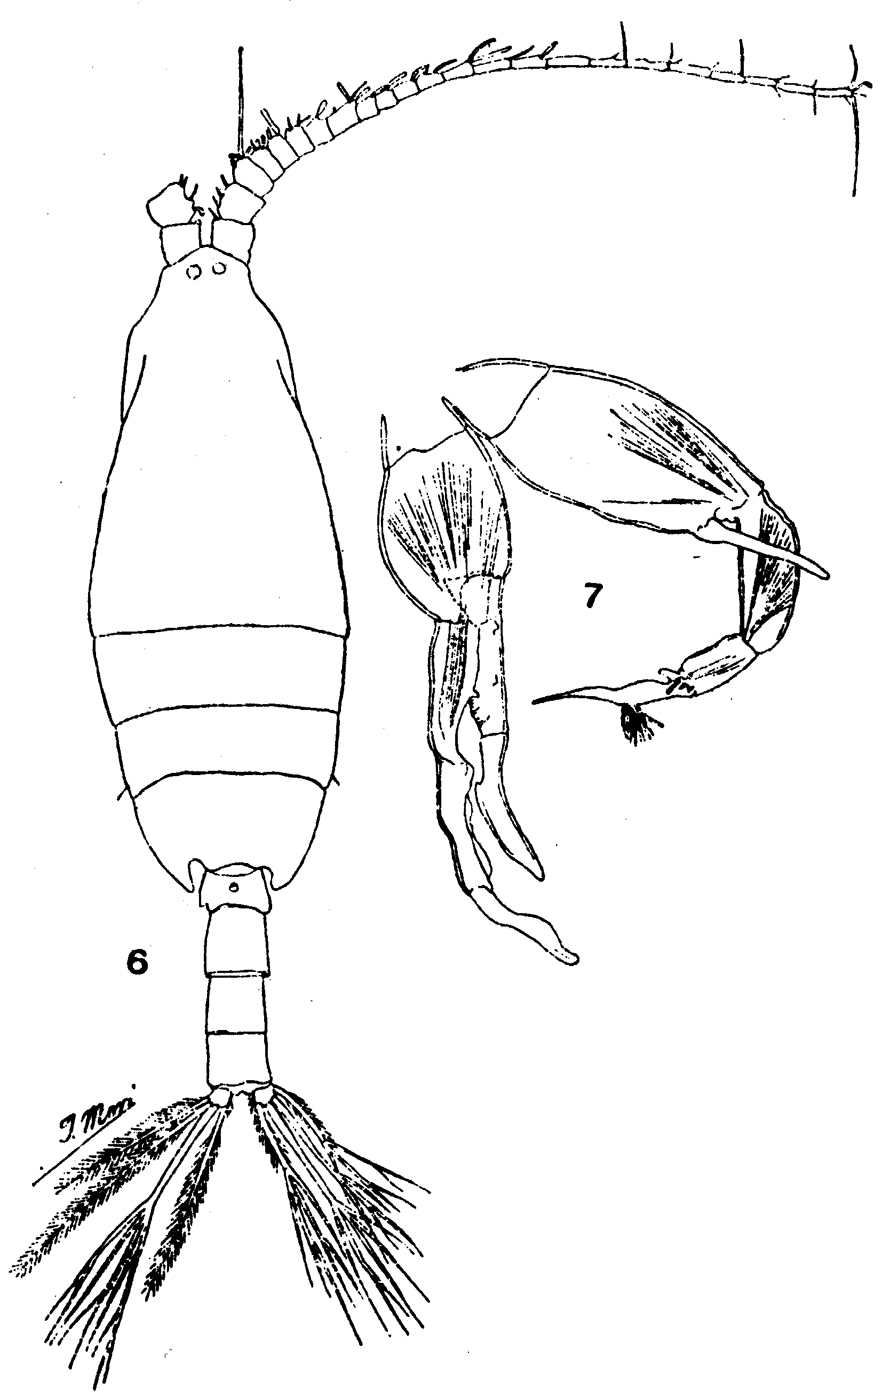 Species Undeuchaeta plumosa - Plate 11 of morphological figures